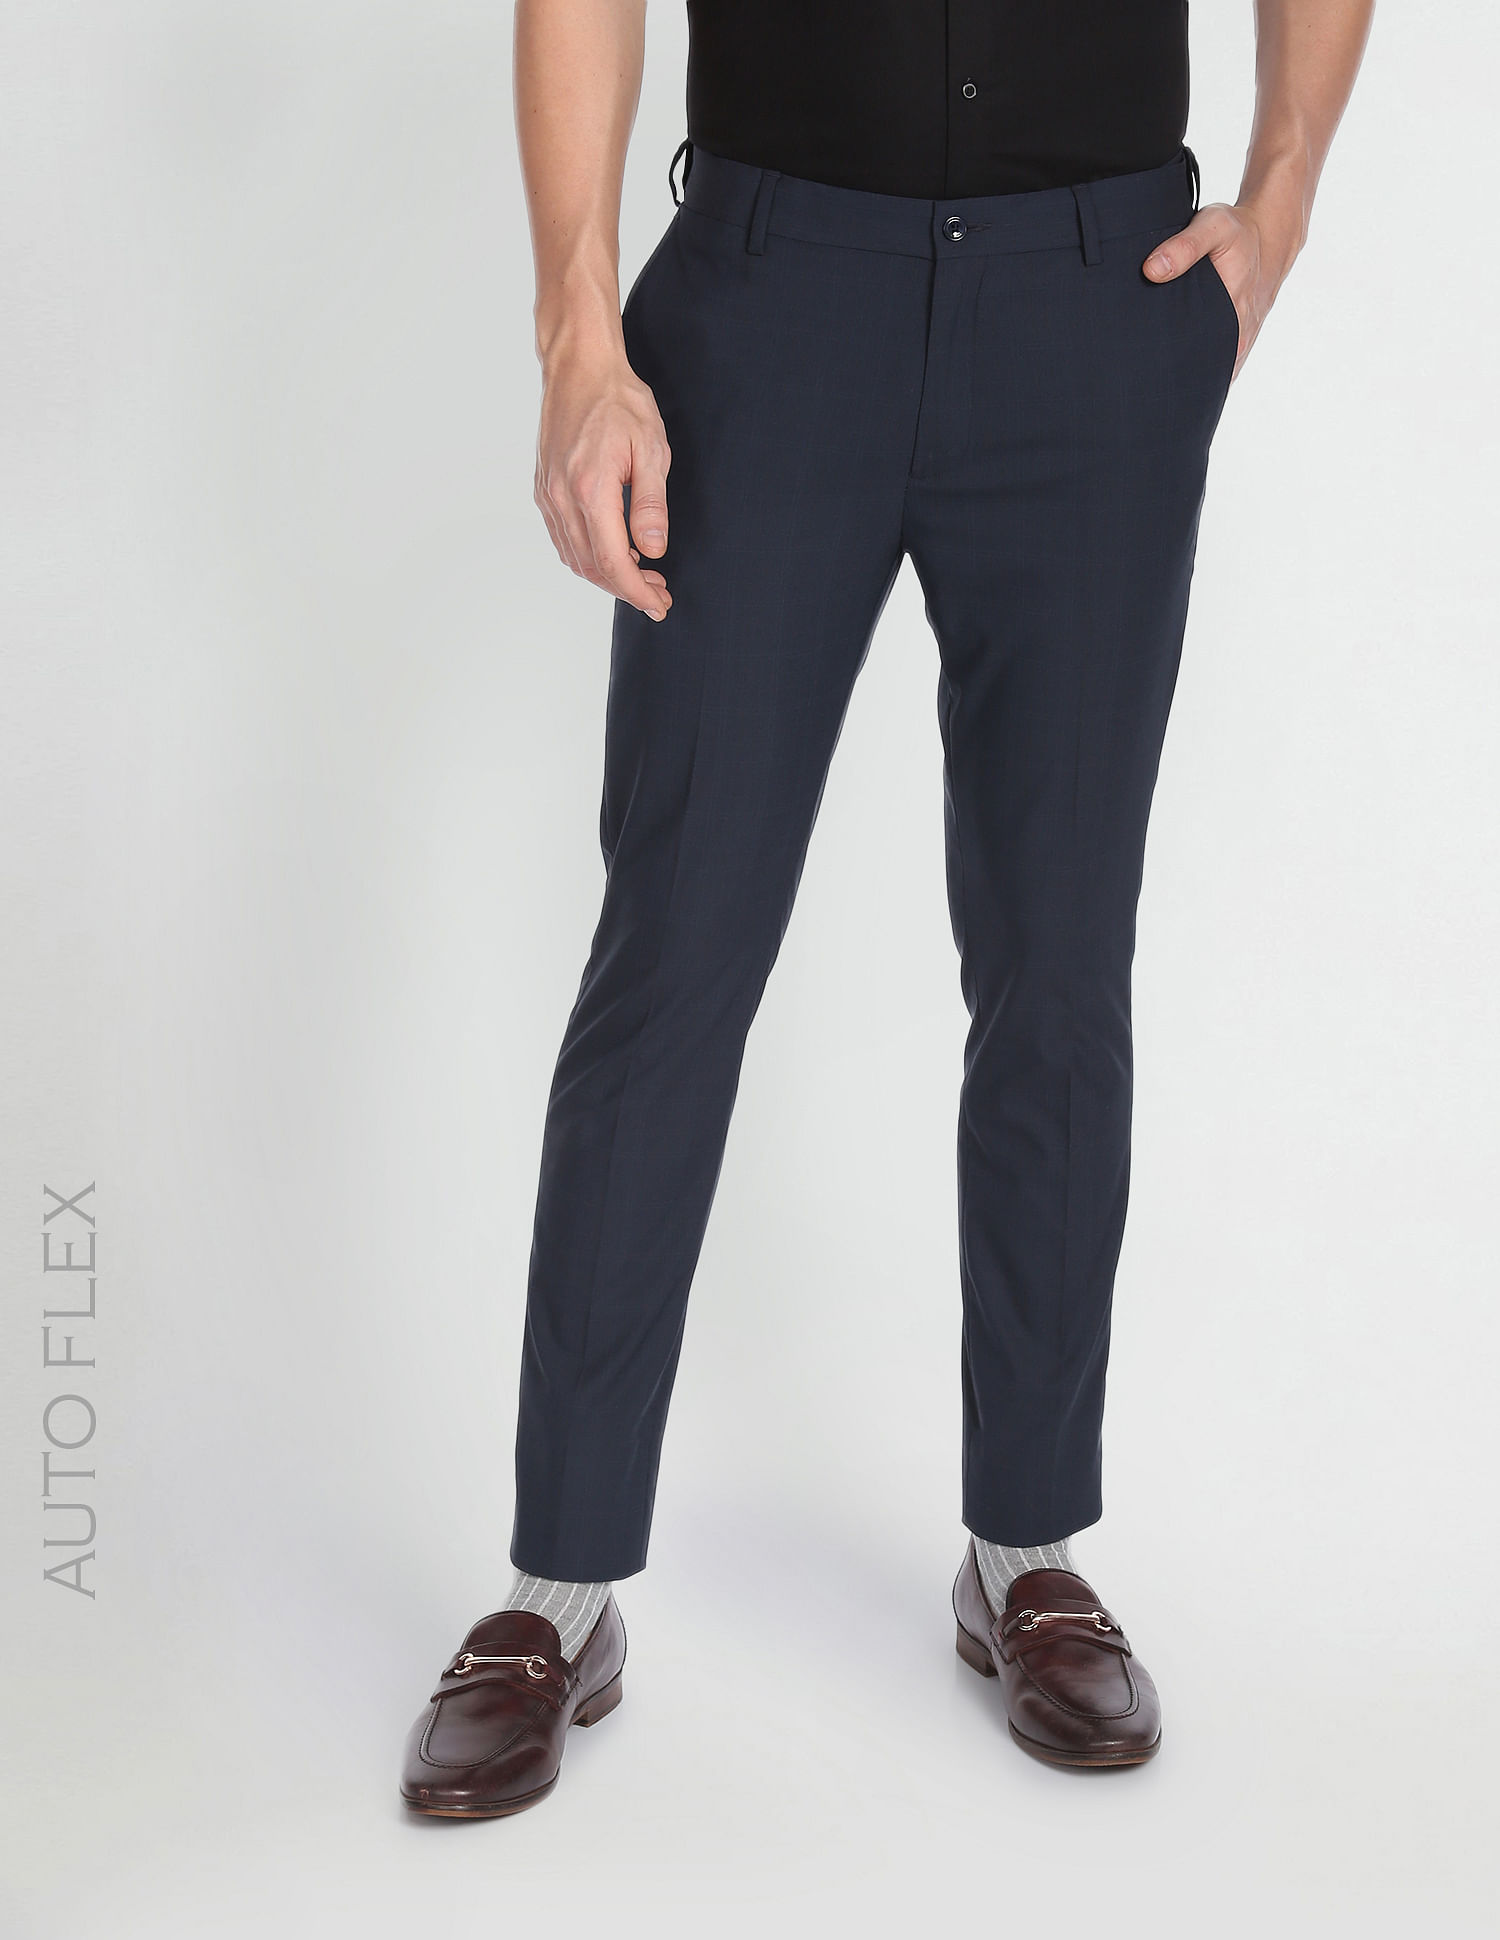 Men's Slim Fit Black Pants – HolloMen